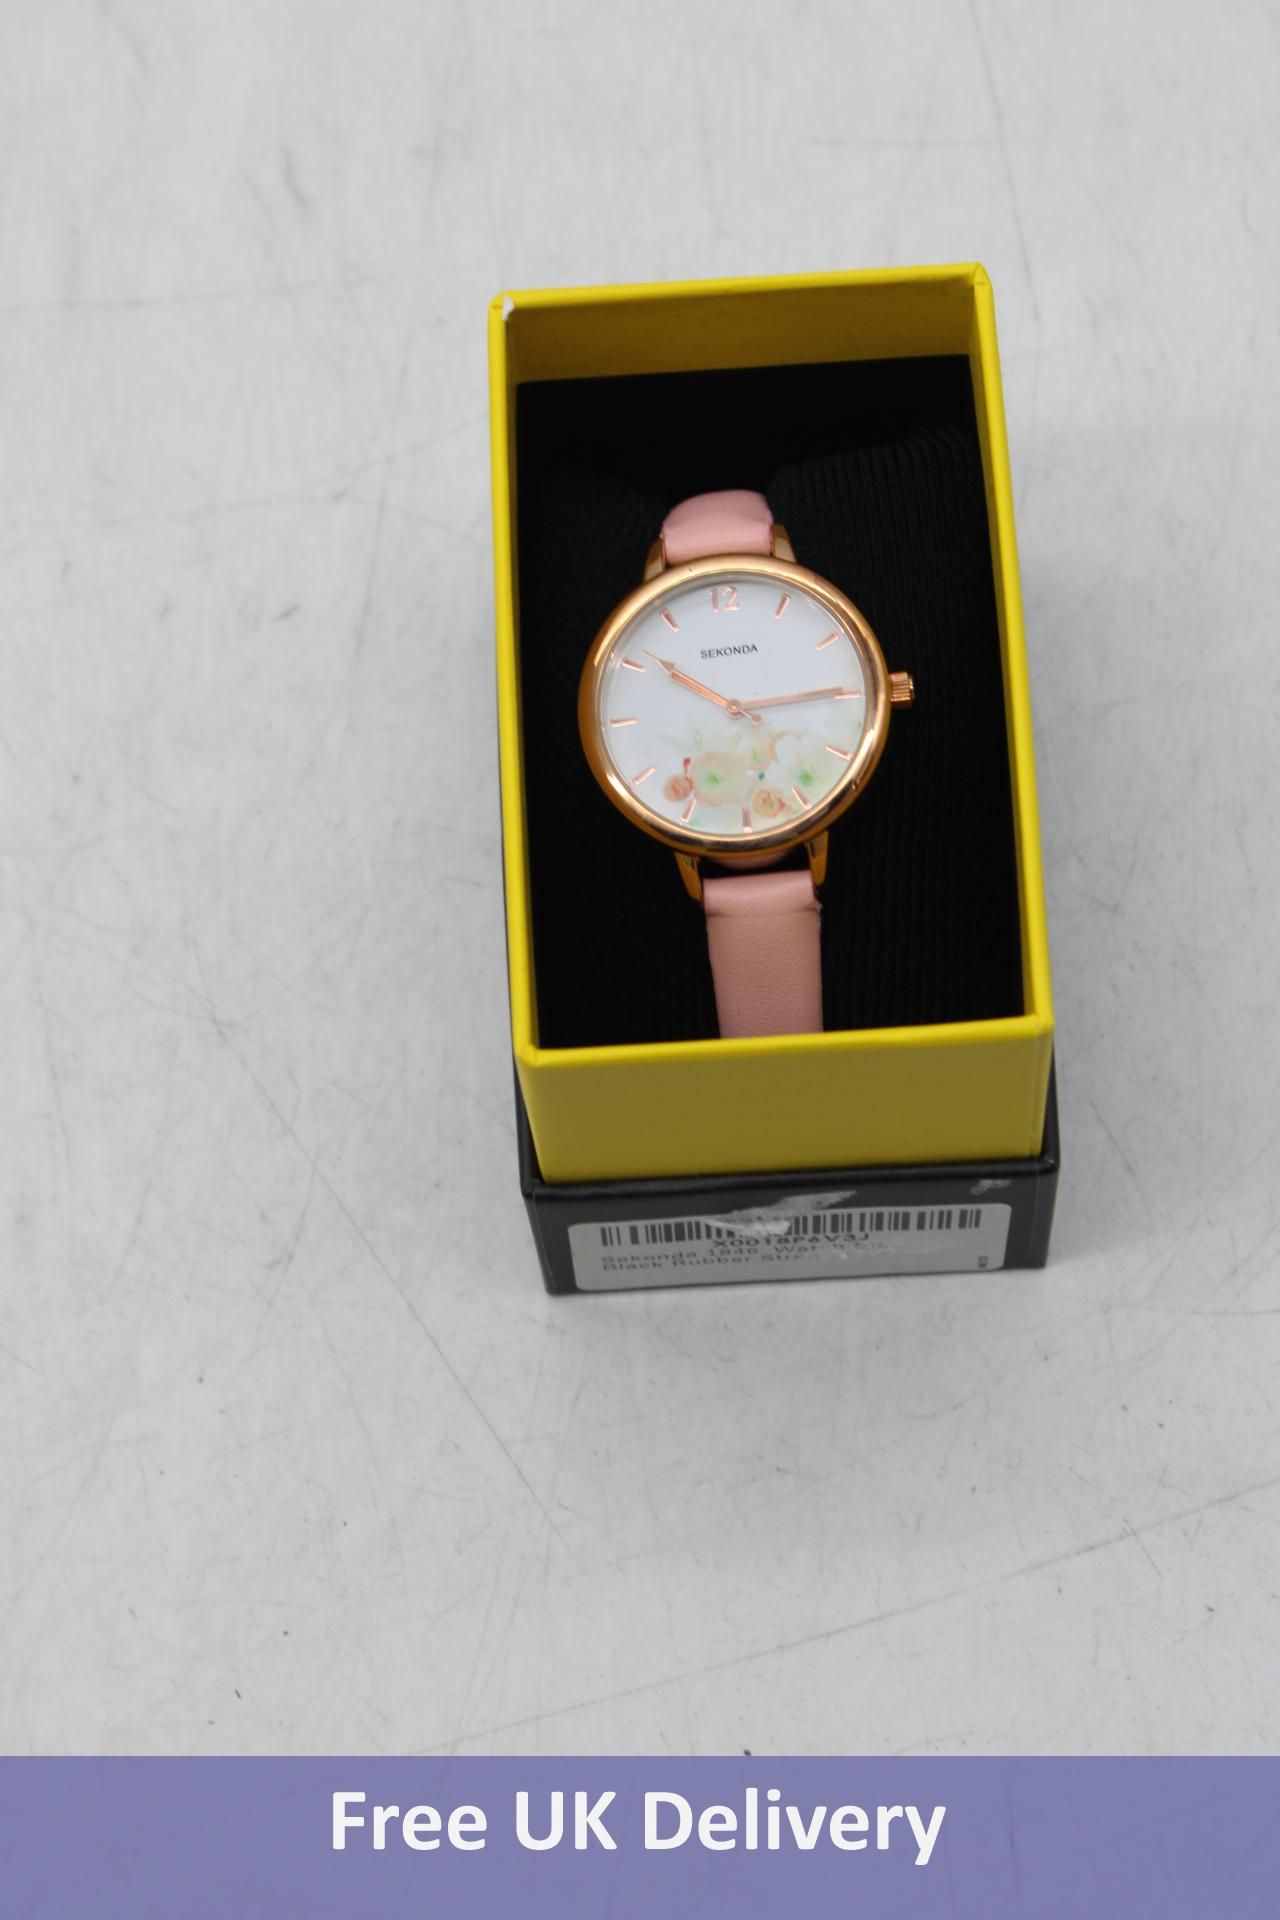 Two Sekonda Ladies Fashion Watch (2625) Round, Pink/Gold, Size 35mm and A Sekonda Classic Rose Gold